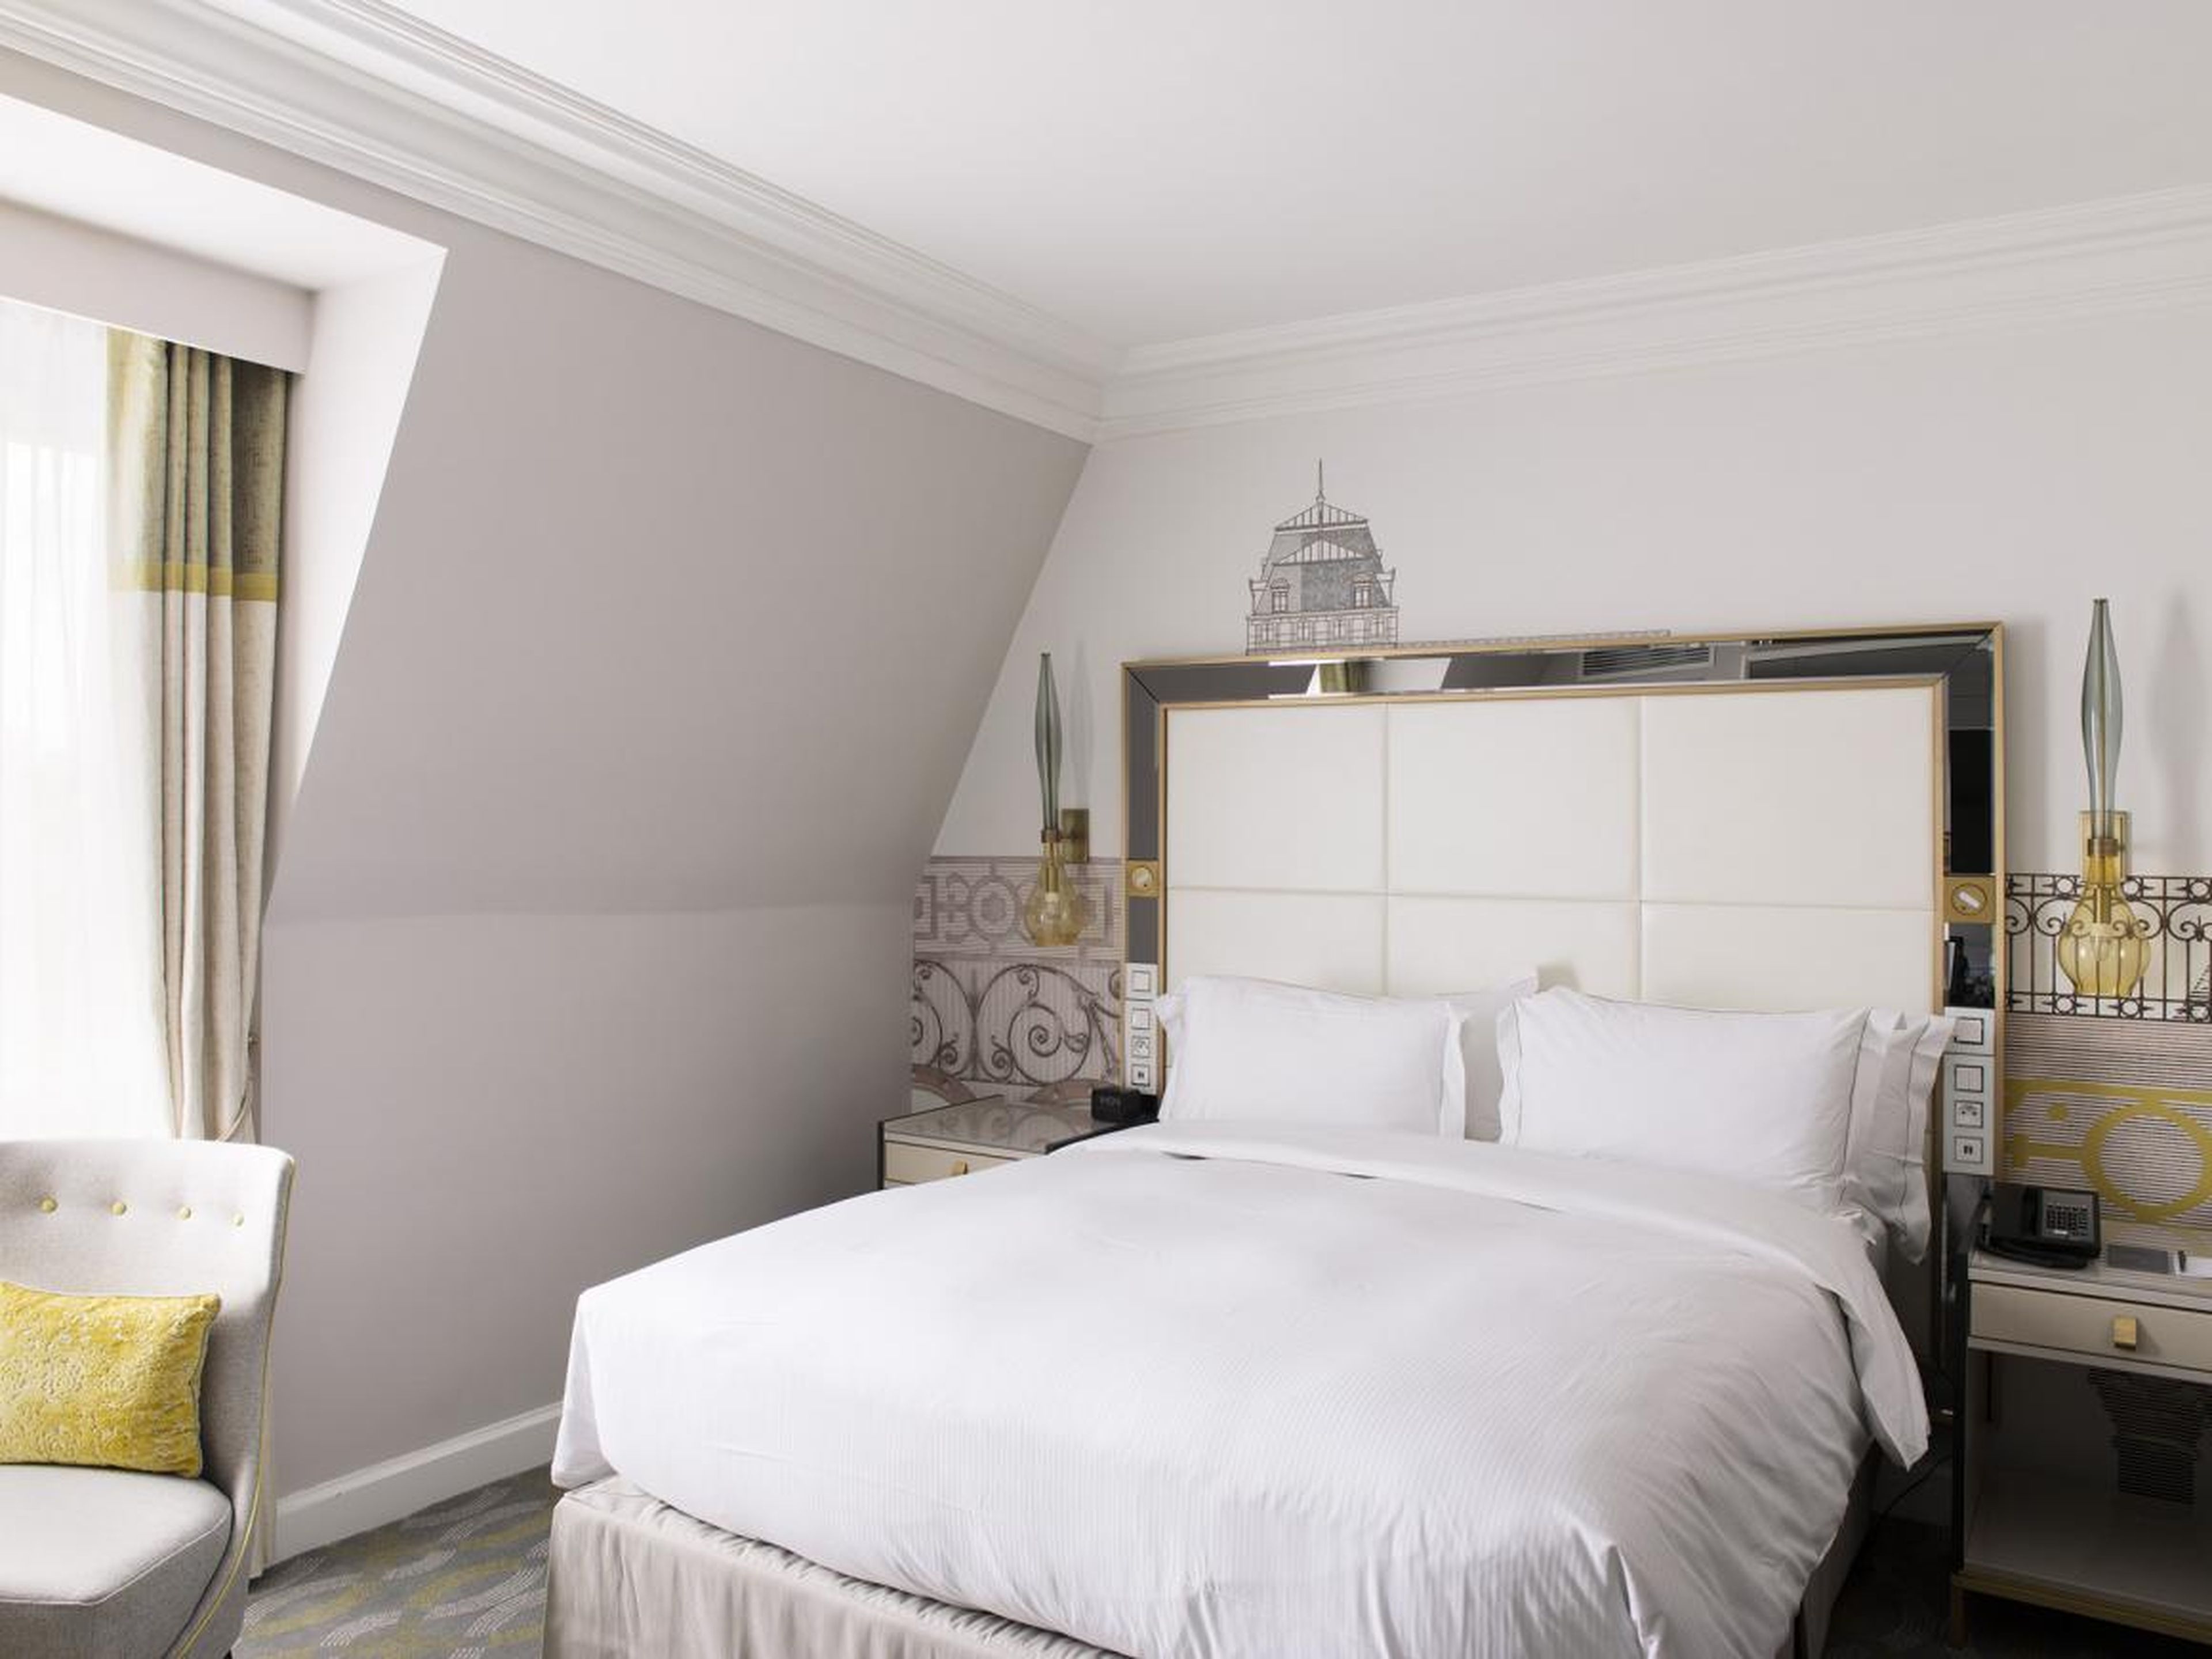 Hilton room in Paris, France.